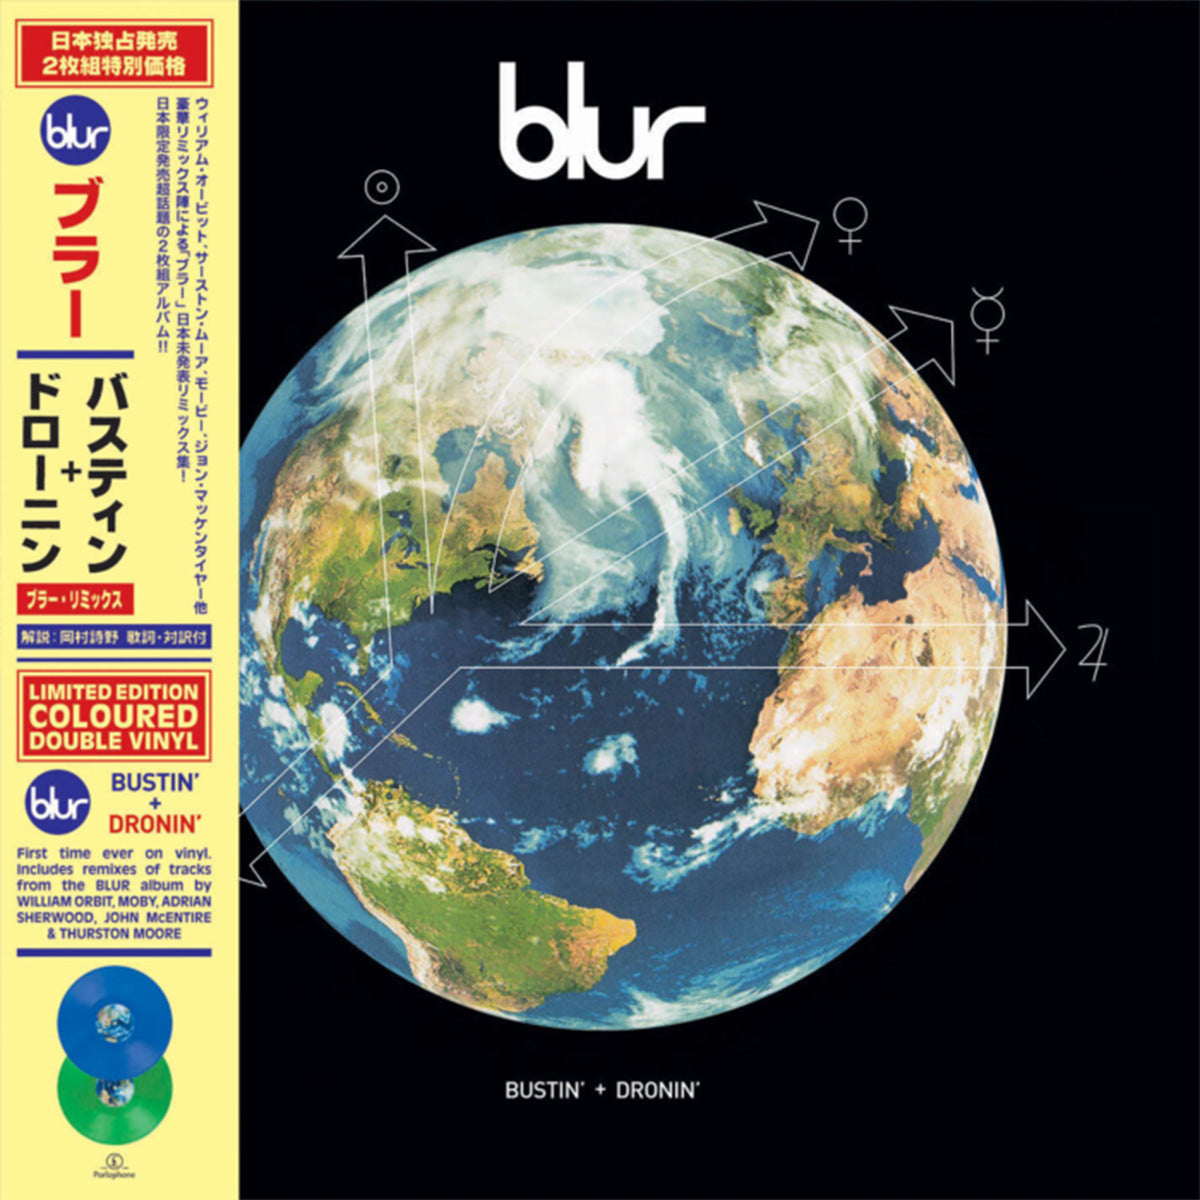 BLUR 'BUSTIN + DRONIN -LTD. JAPAN EDITION-'